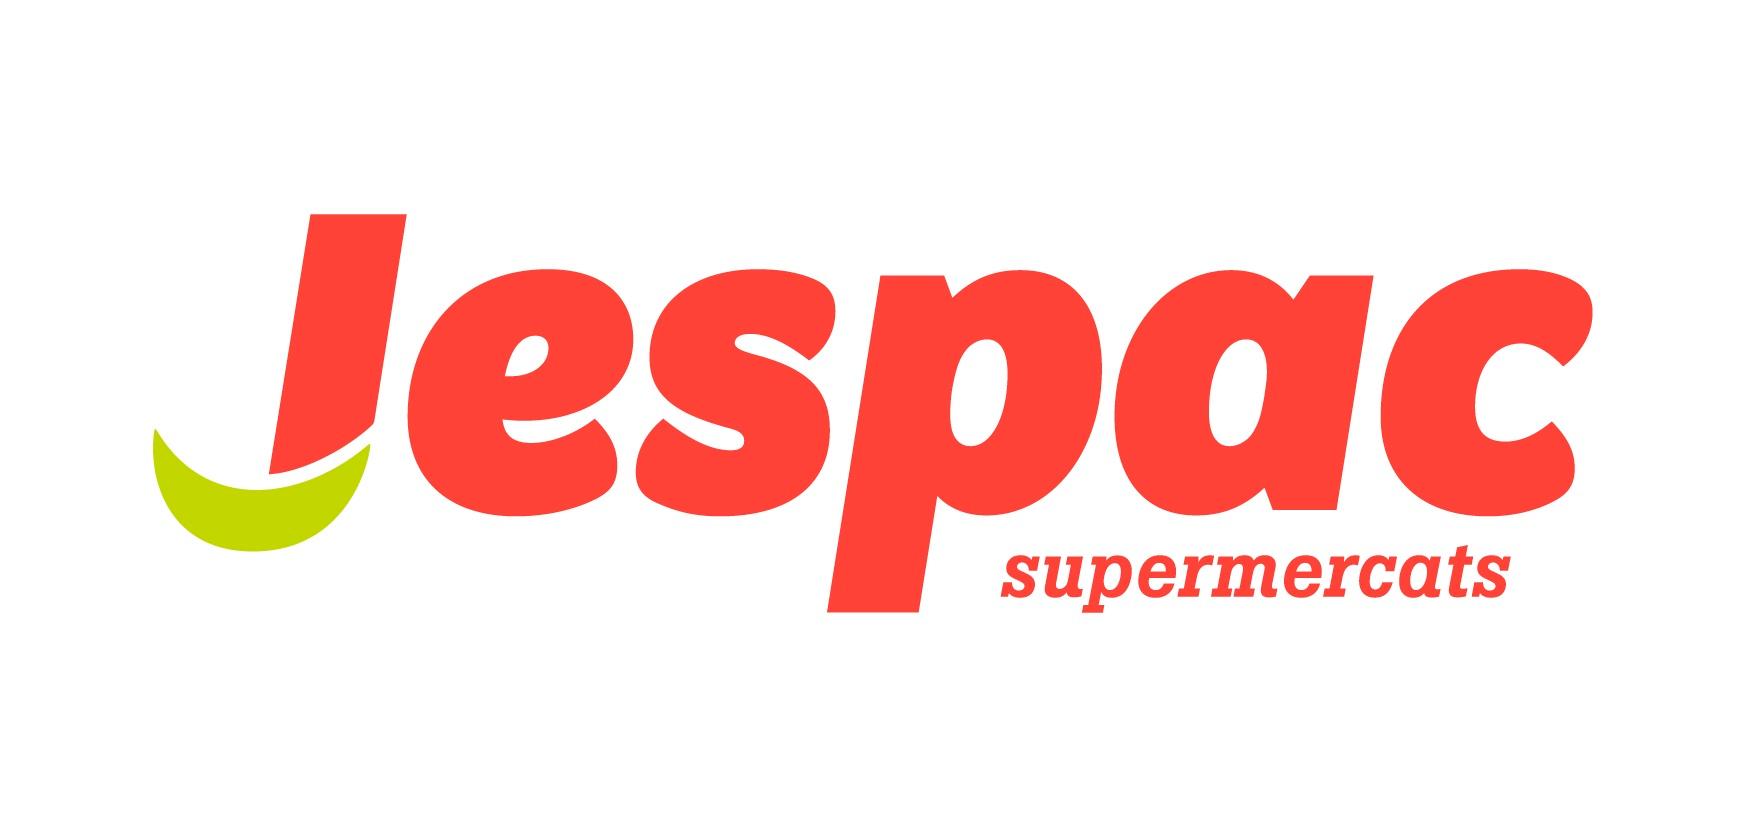 Supermercats Jespac